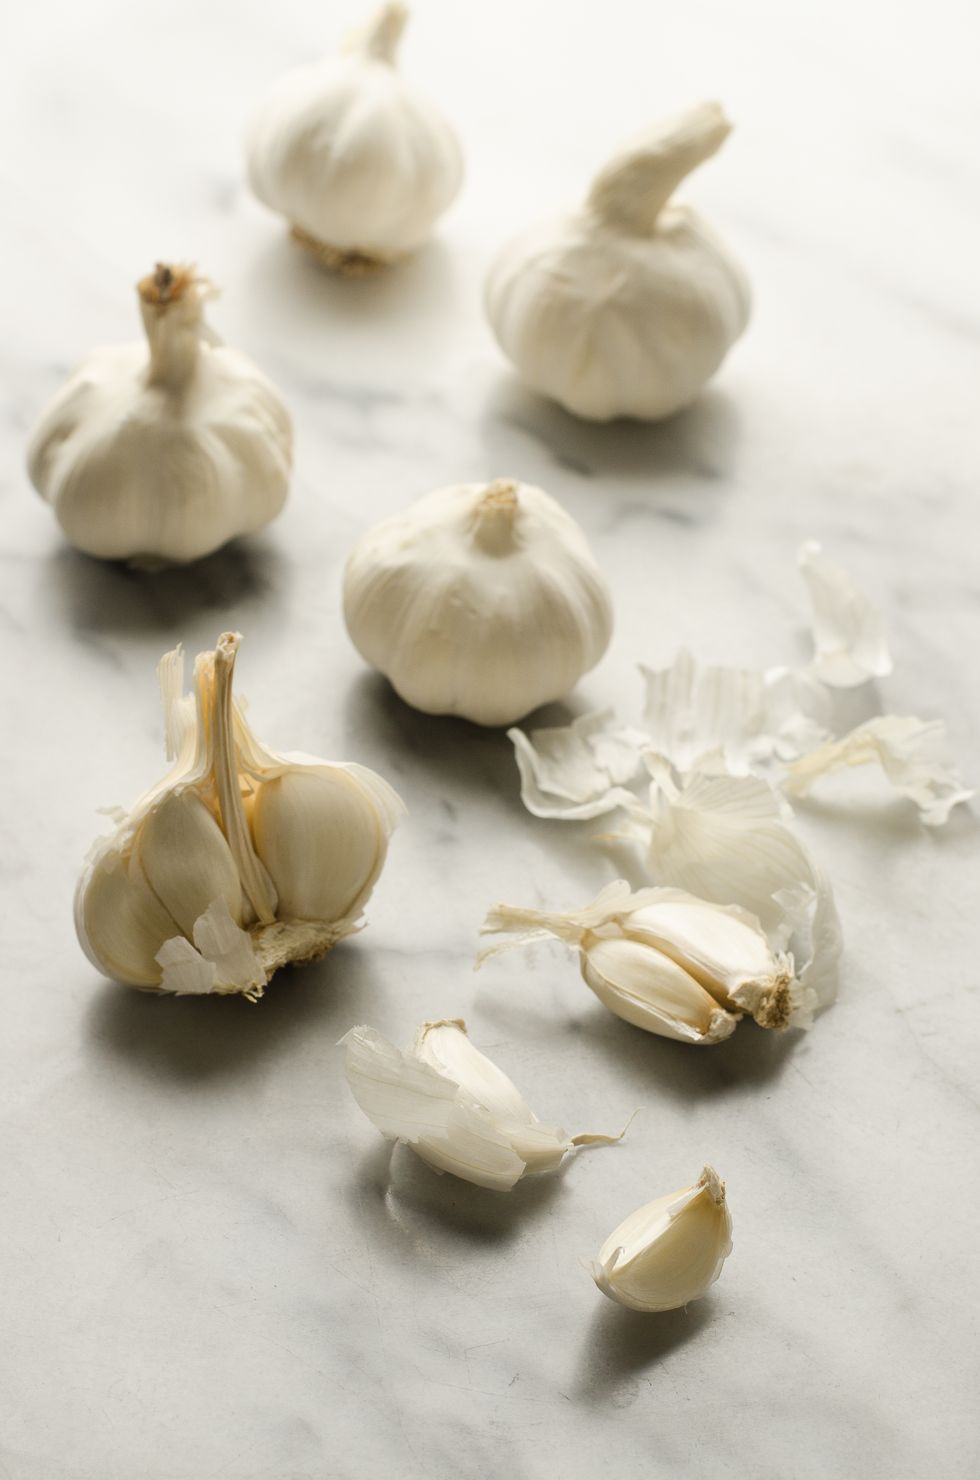 Garlic 101